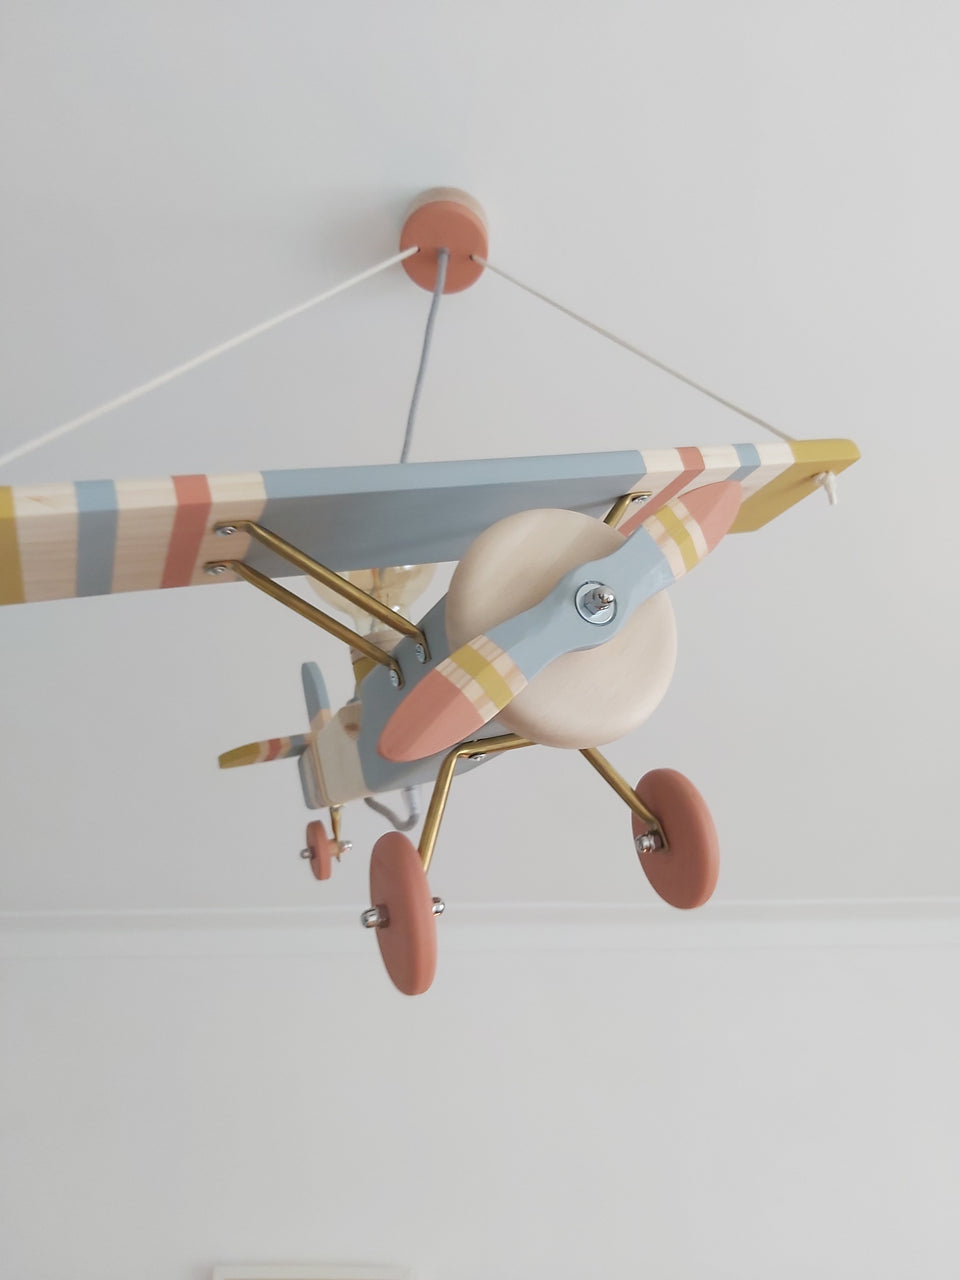 Candeeiro Avião Tecto Cinza & Terracota -  Ceiling wood Airplane Lamp gray & Terracota